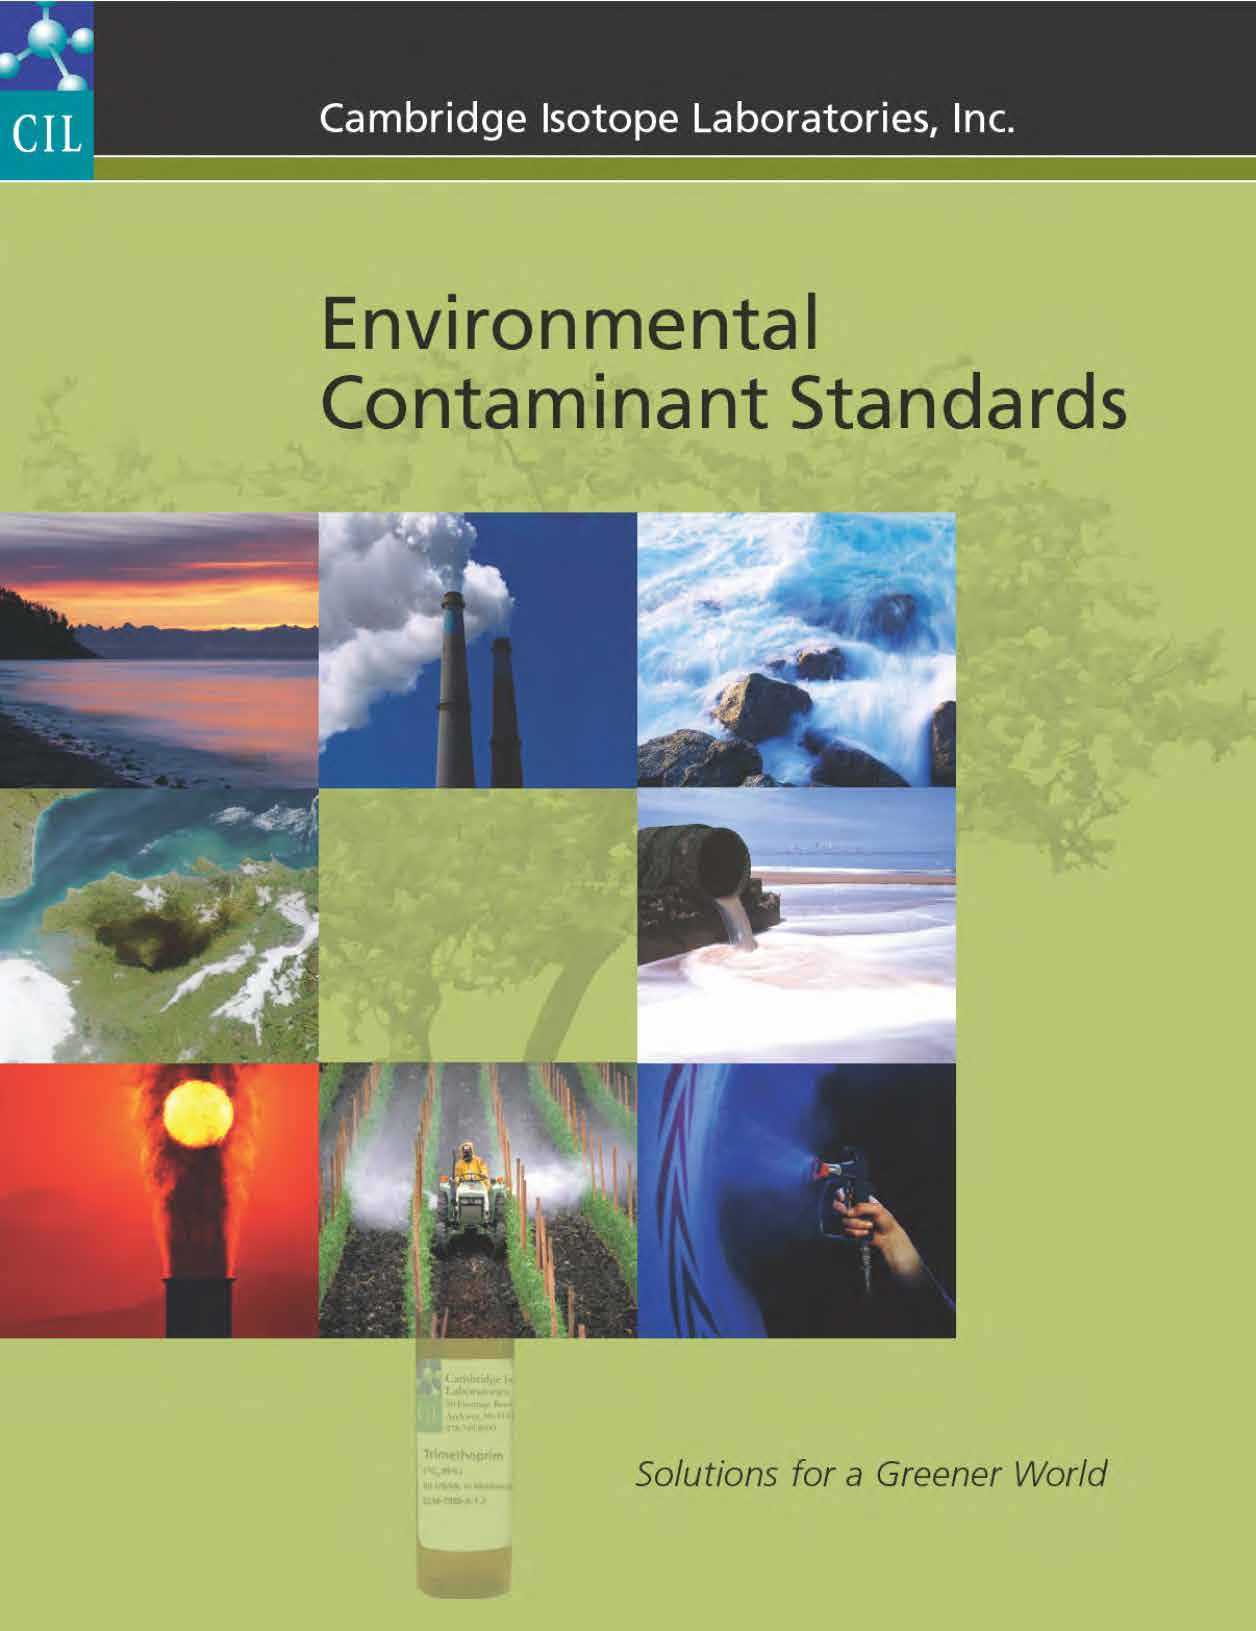 CIL - Environmental Standards